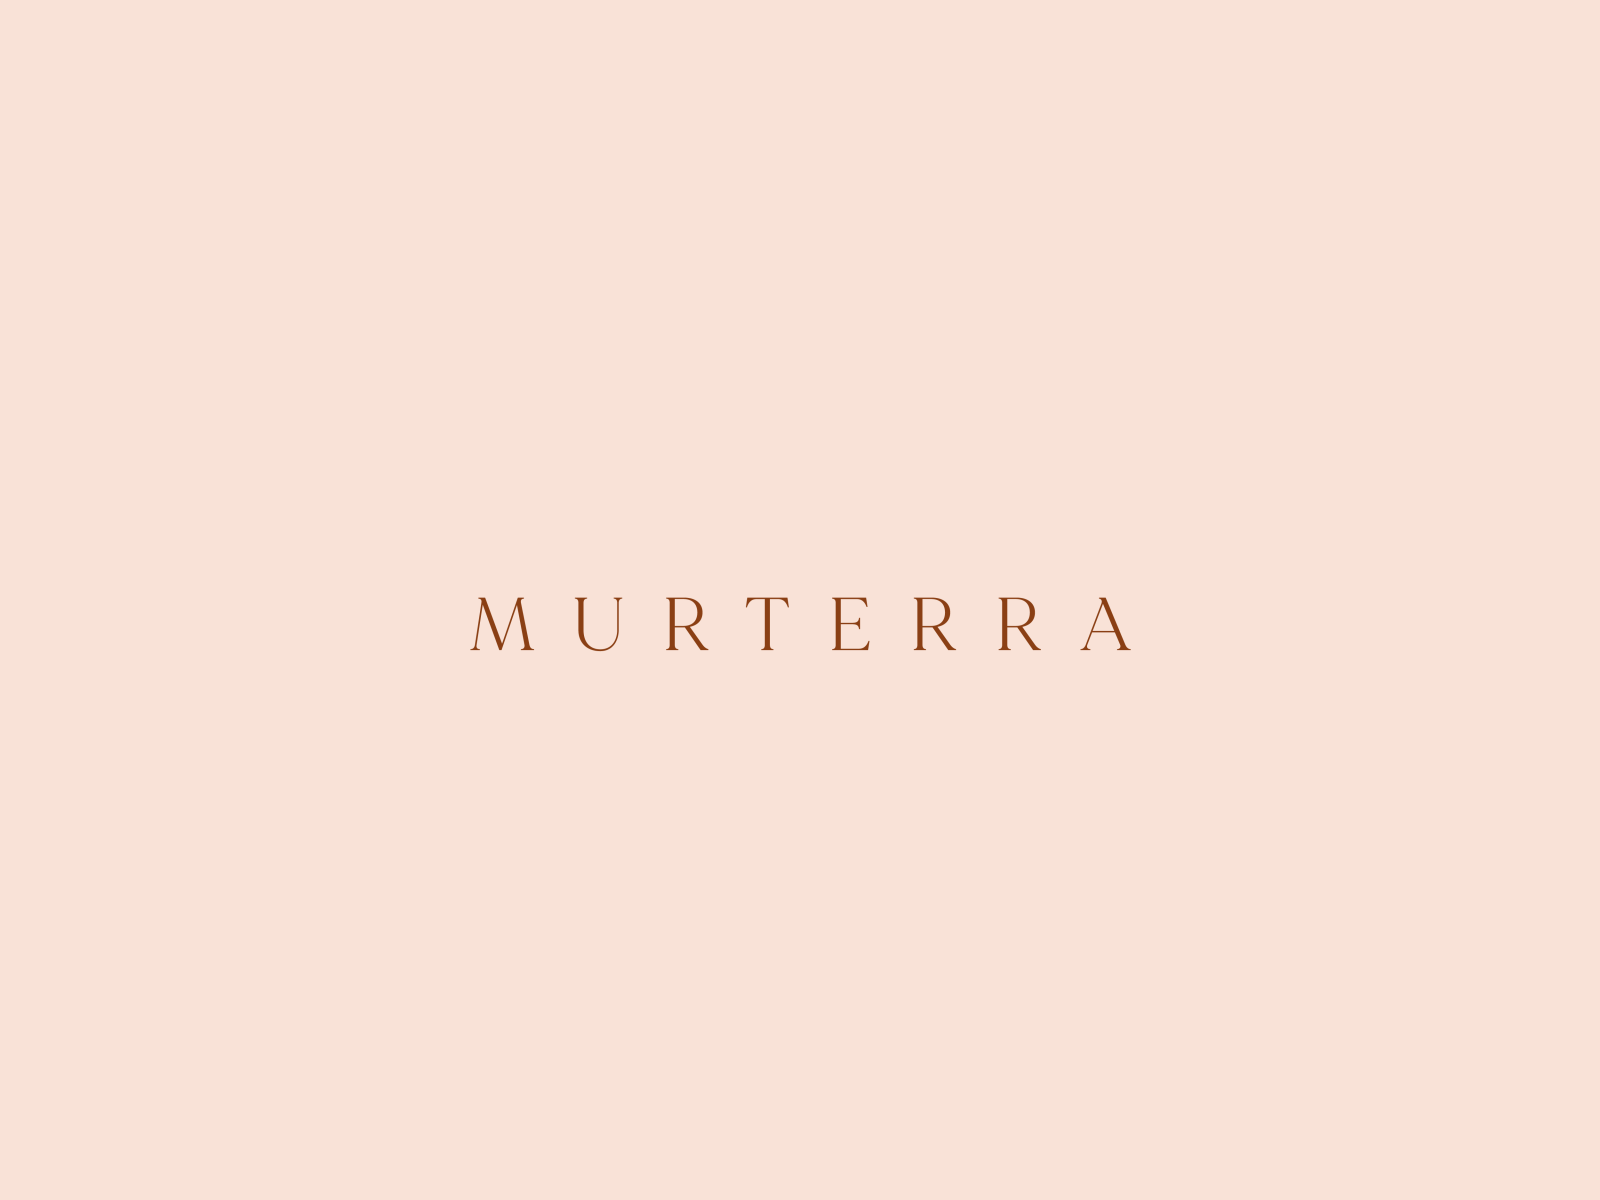 Murterra Logo Font by Ana Luísa Santos on Dribbble